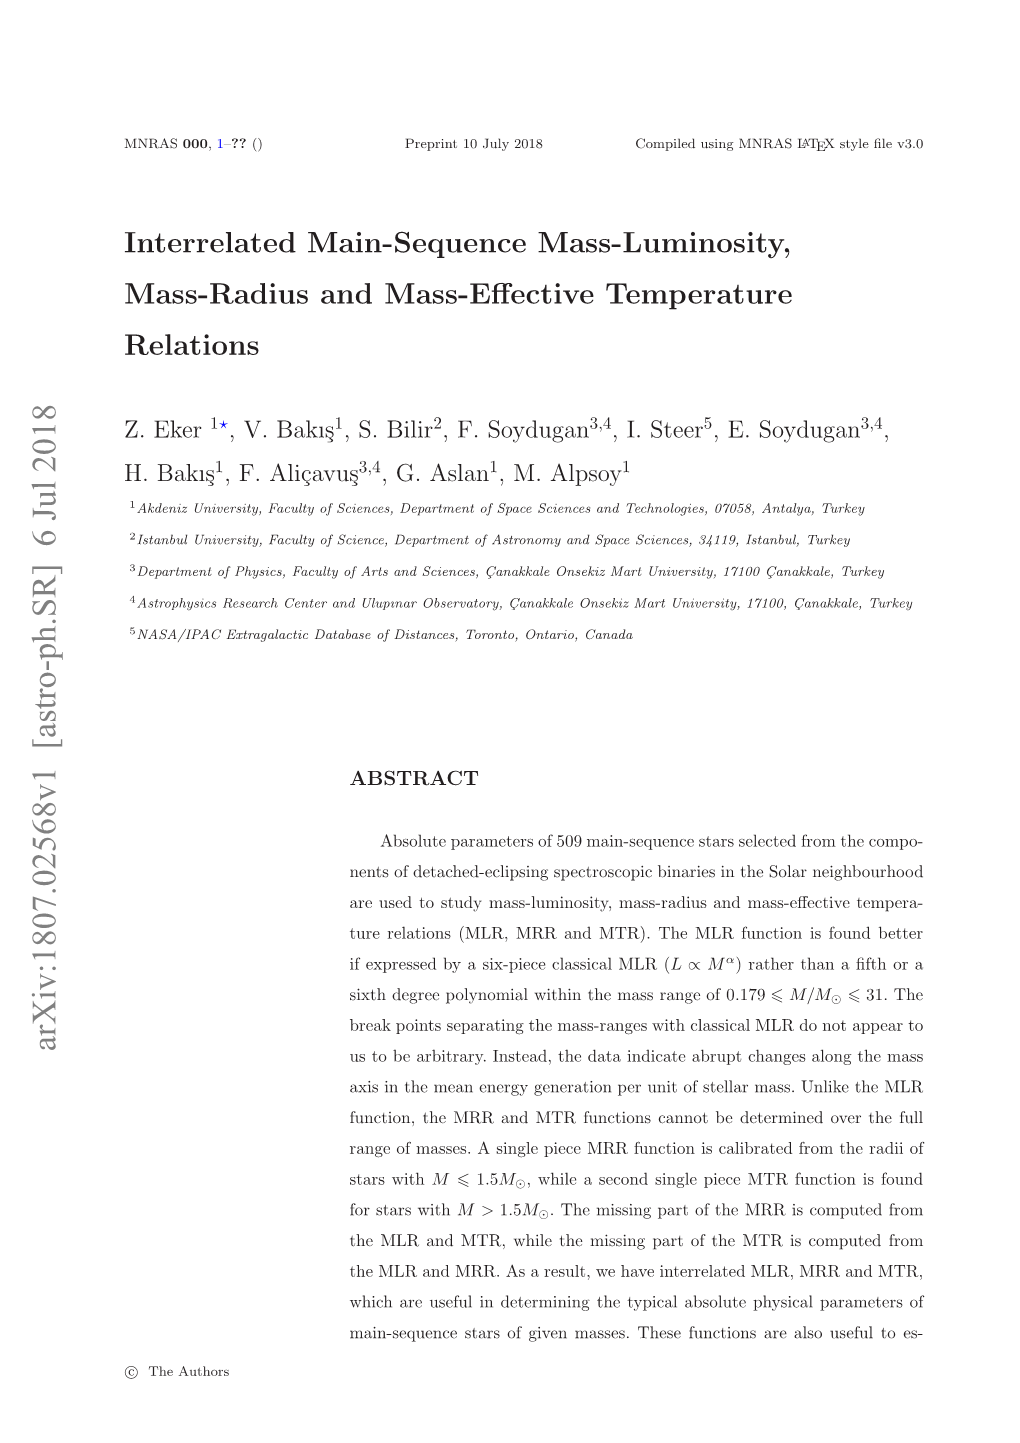 Interrelated Main-Sequence Mass-Luminosity, Mass-Radius and Mass-Effective Temperature Relations